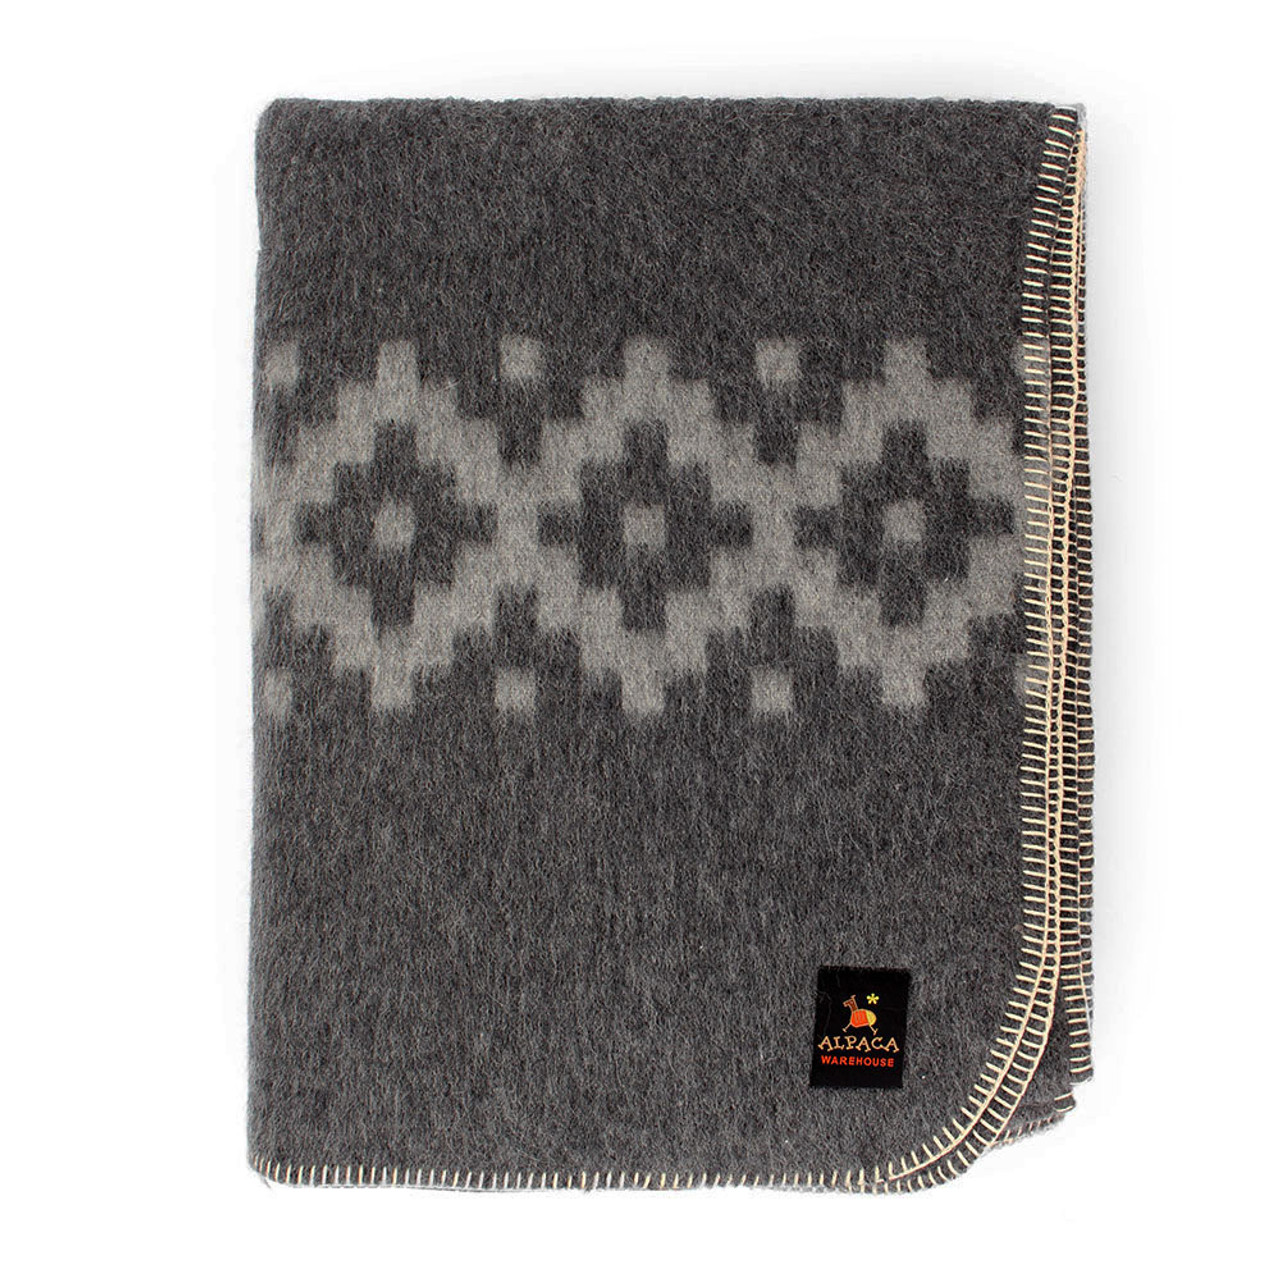 Alpaca Wool Thick Blanket King Size - Biface Design - Alpaca Warehouse